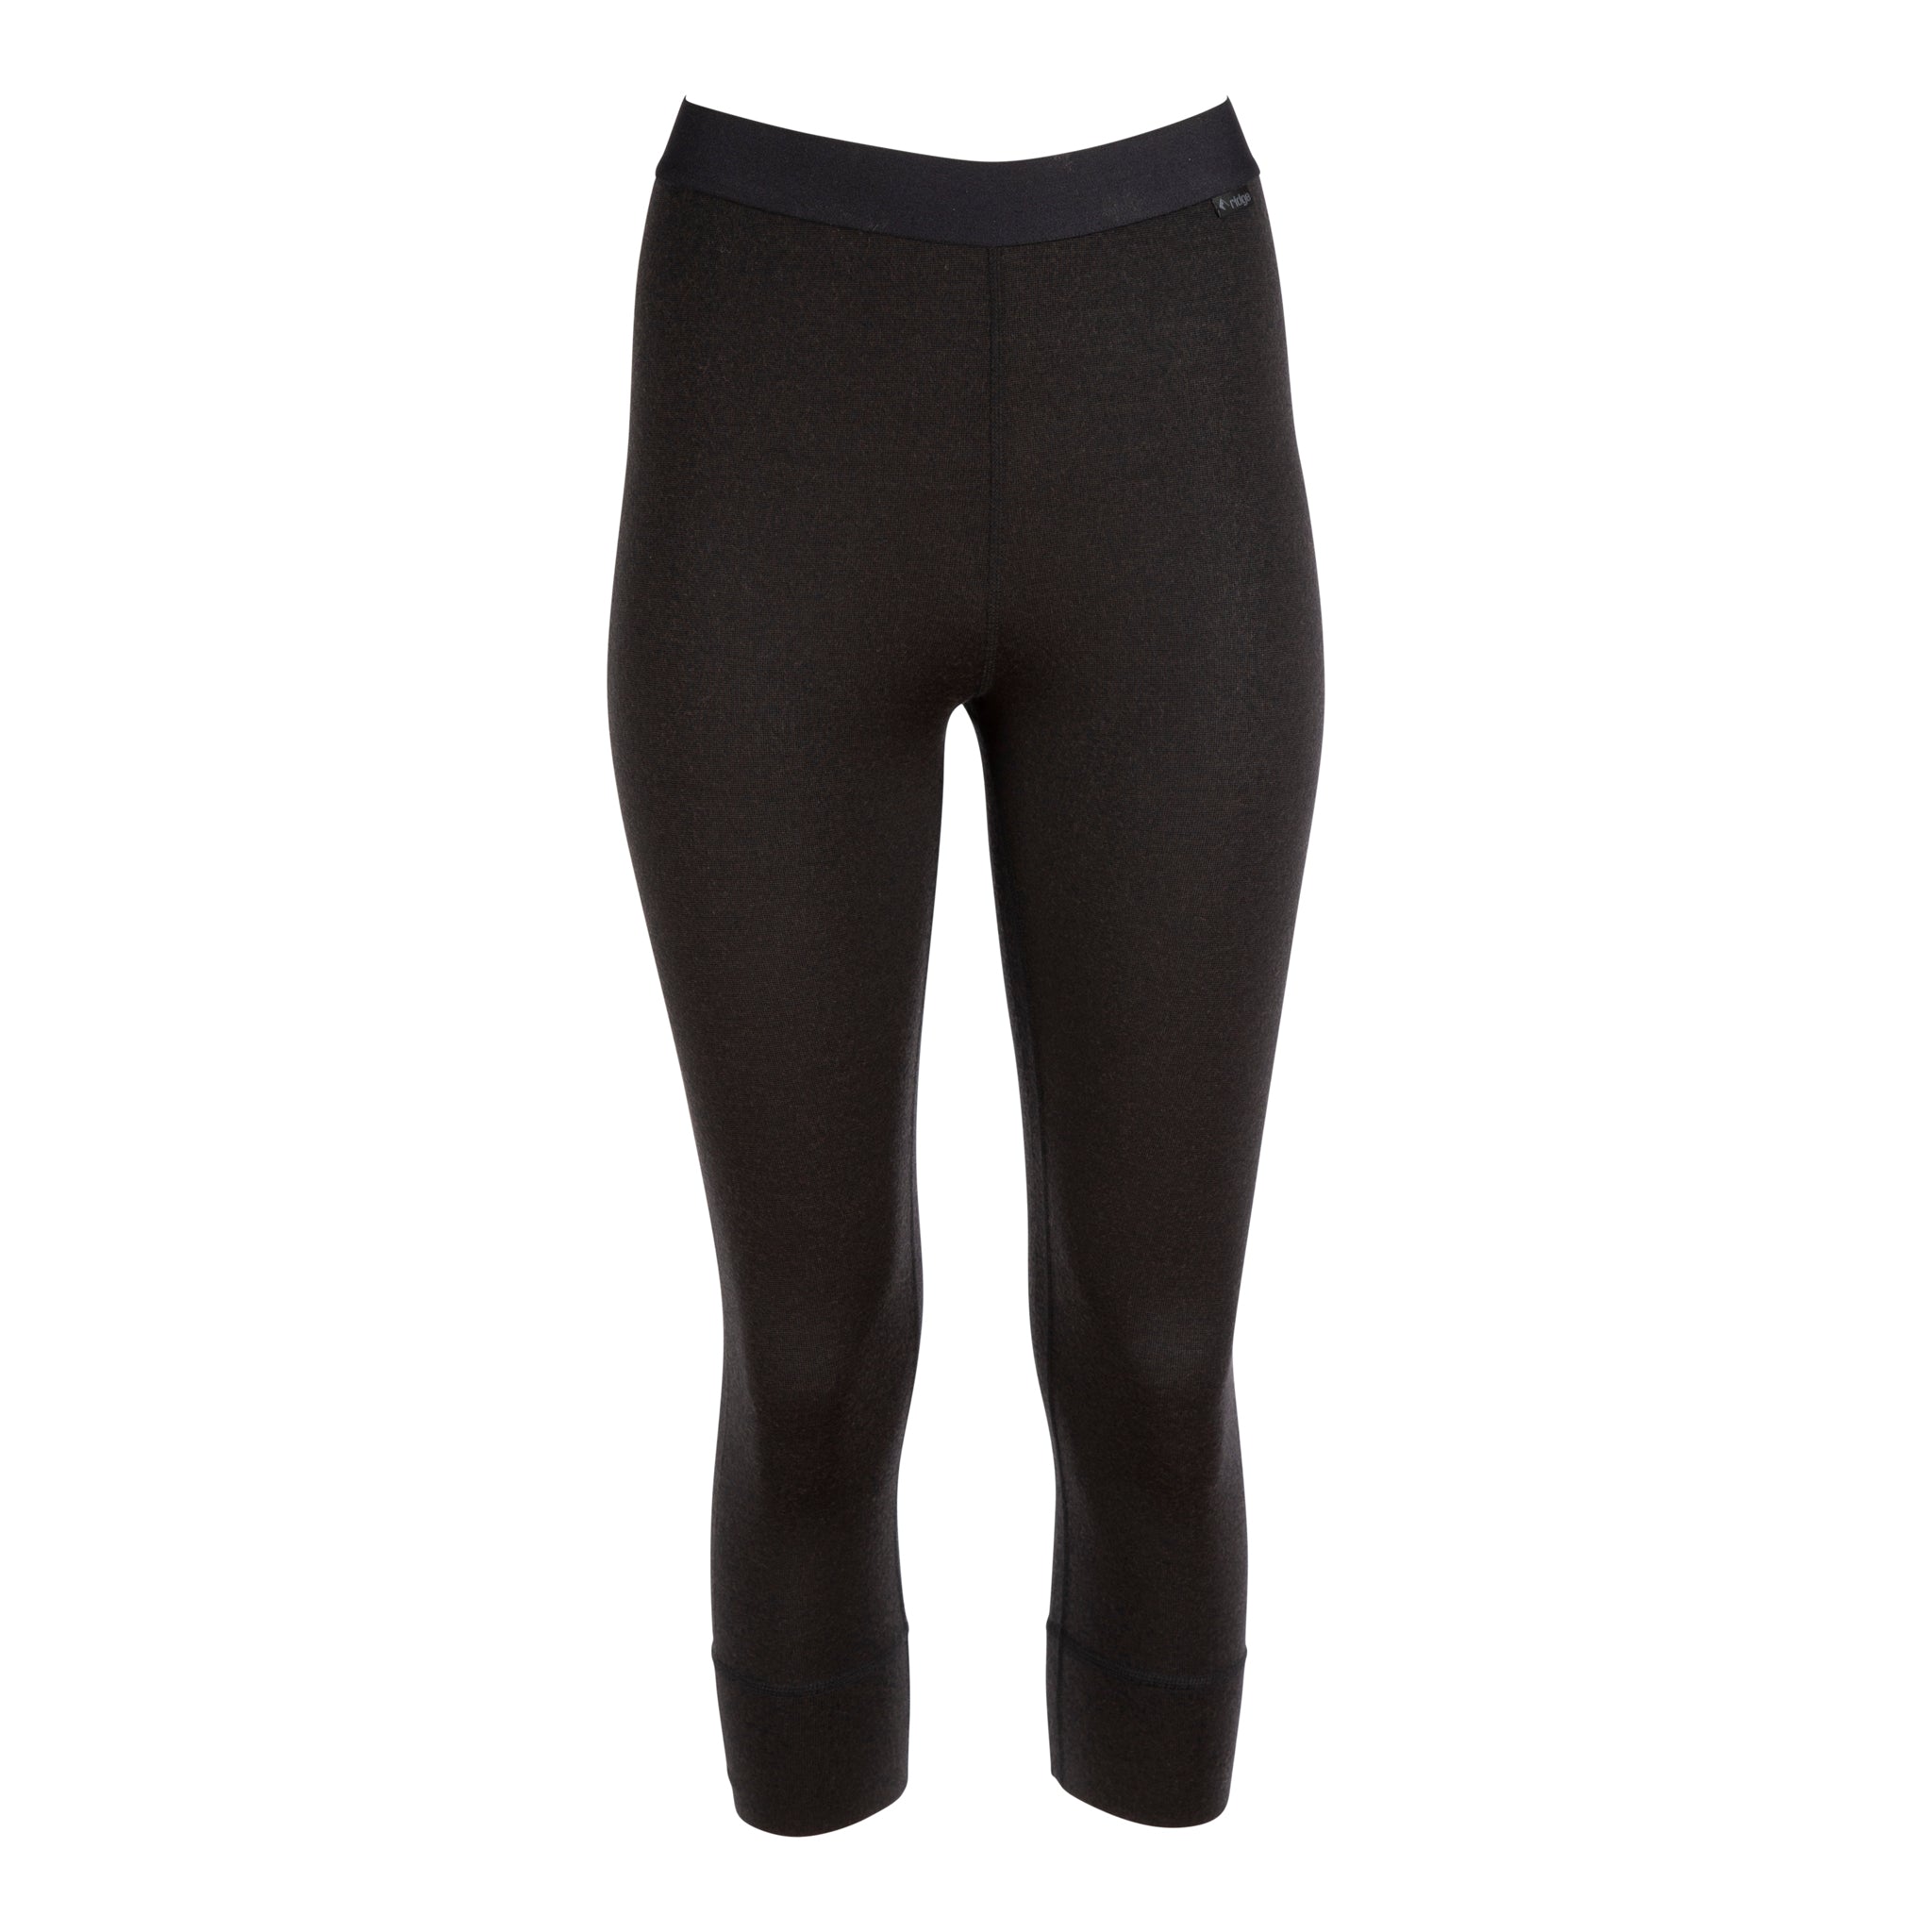 Buy Merino Wool Women's Base Layer Pants — 100% Organic Wool